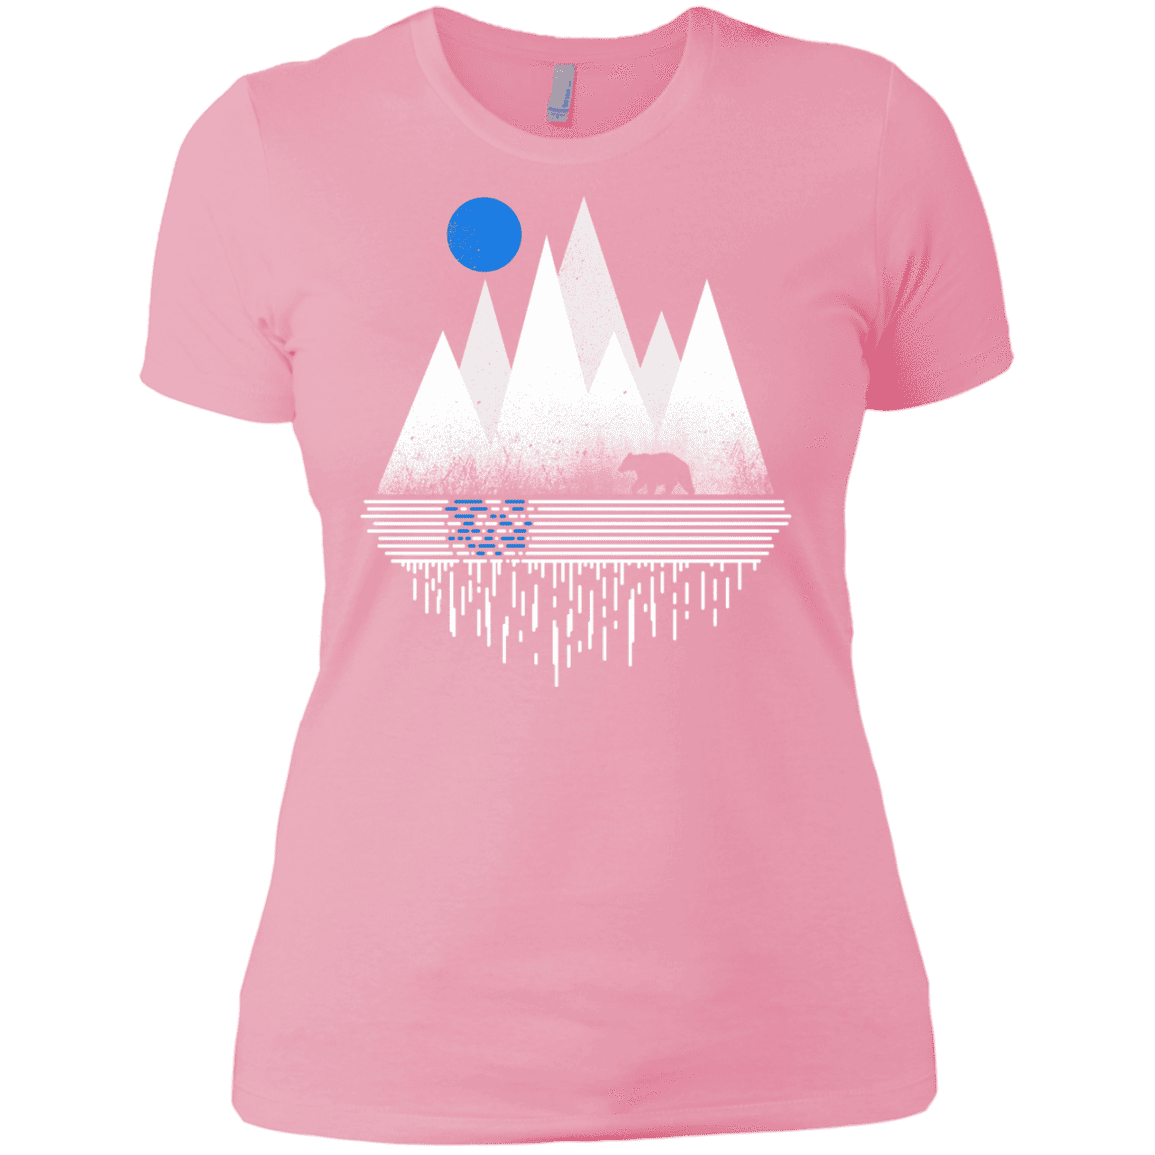 T-Shirts Light Pink / X-Small Blue Moon Women's Premium T-Shirt